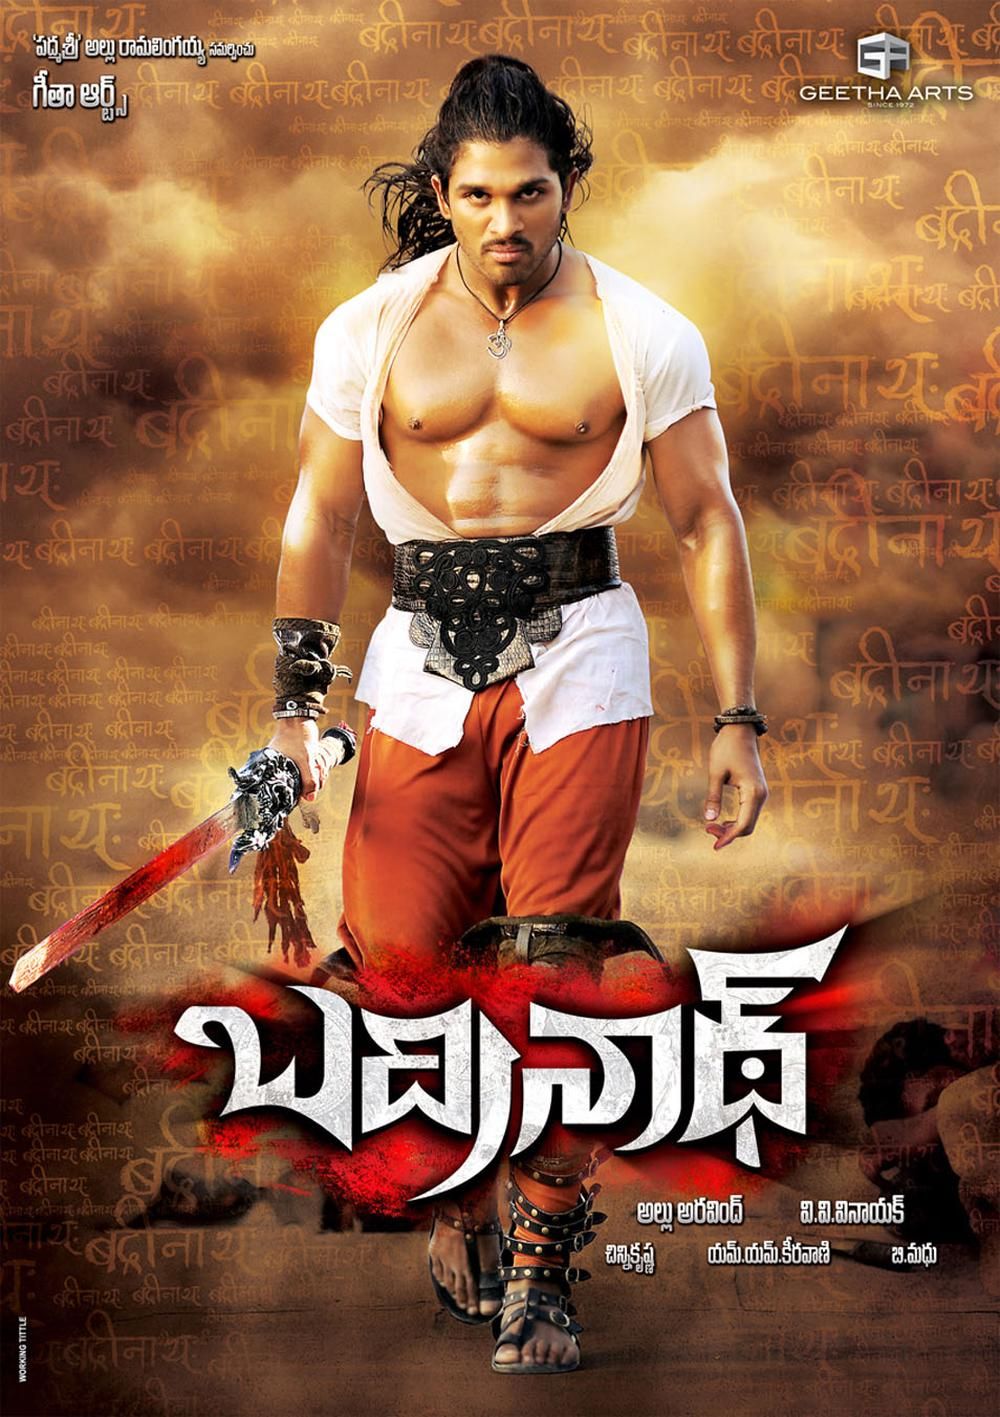 Badrinath (2011) Hindi Dubbed BluRay download full movie